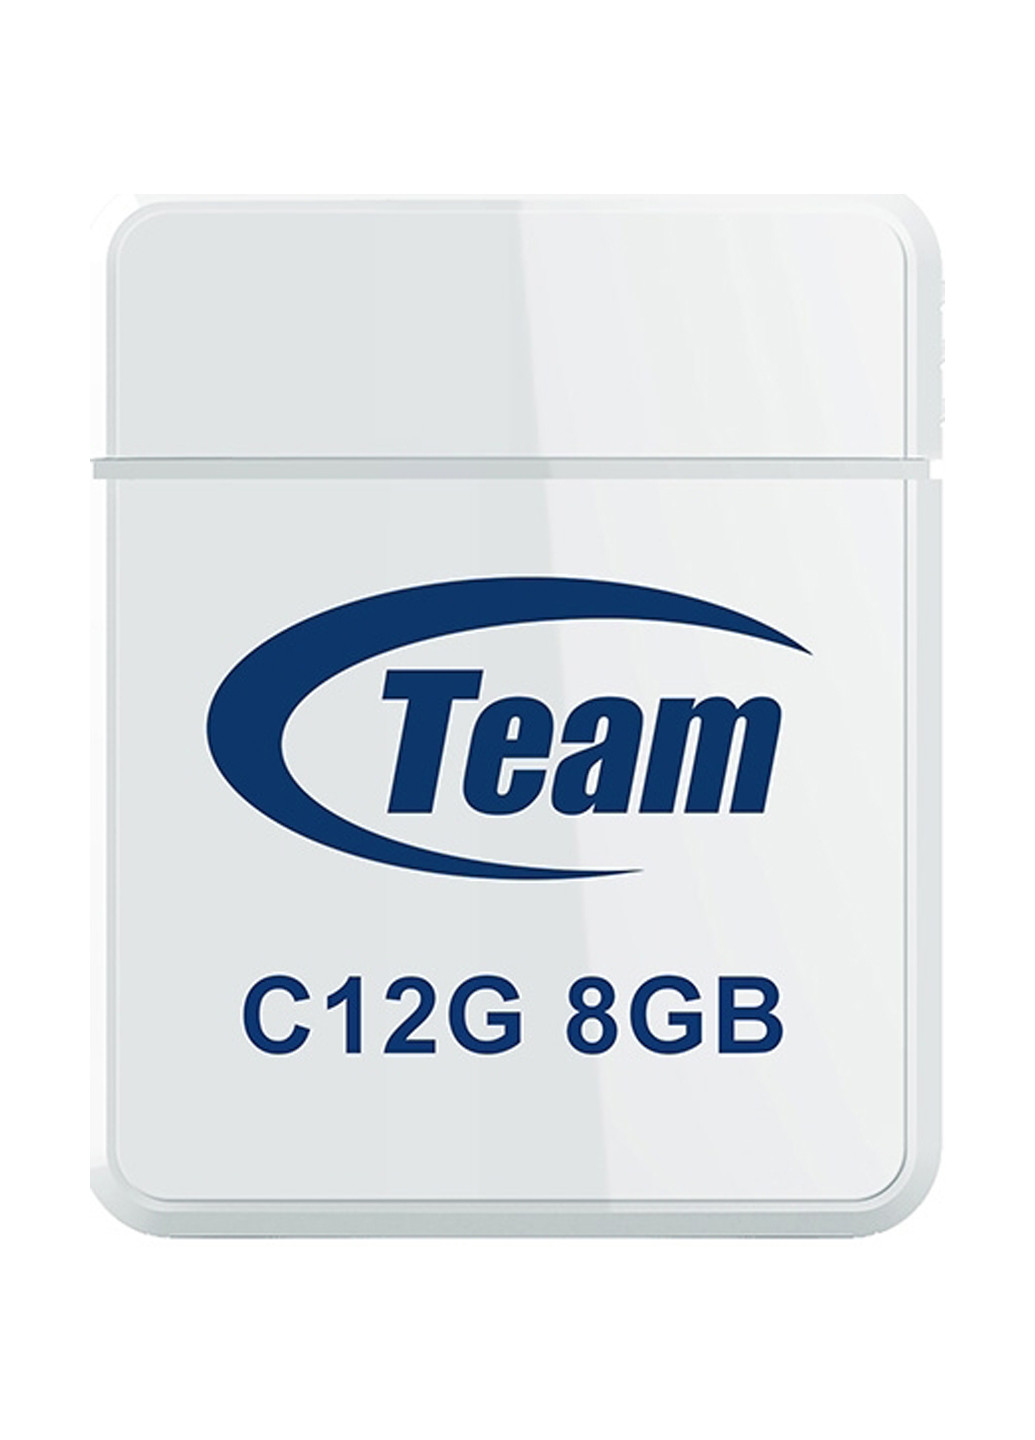 Флеш память USB C12G 8Gb Black (TC12G8GB01) Team флеш память usb team c12g 8gb black (tc12g8gb01) (134201676)